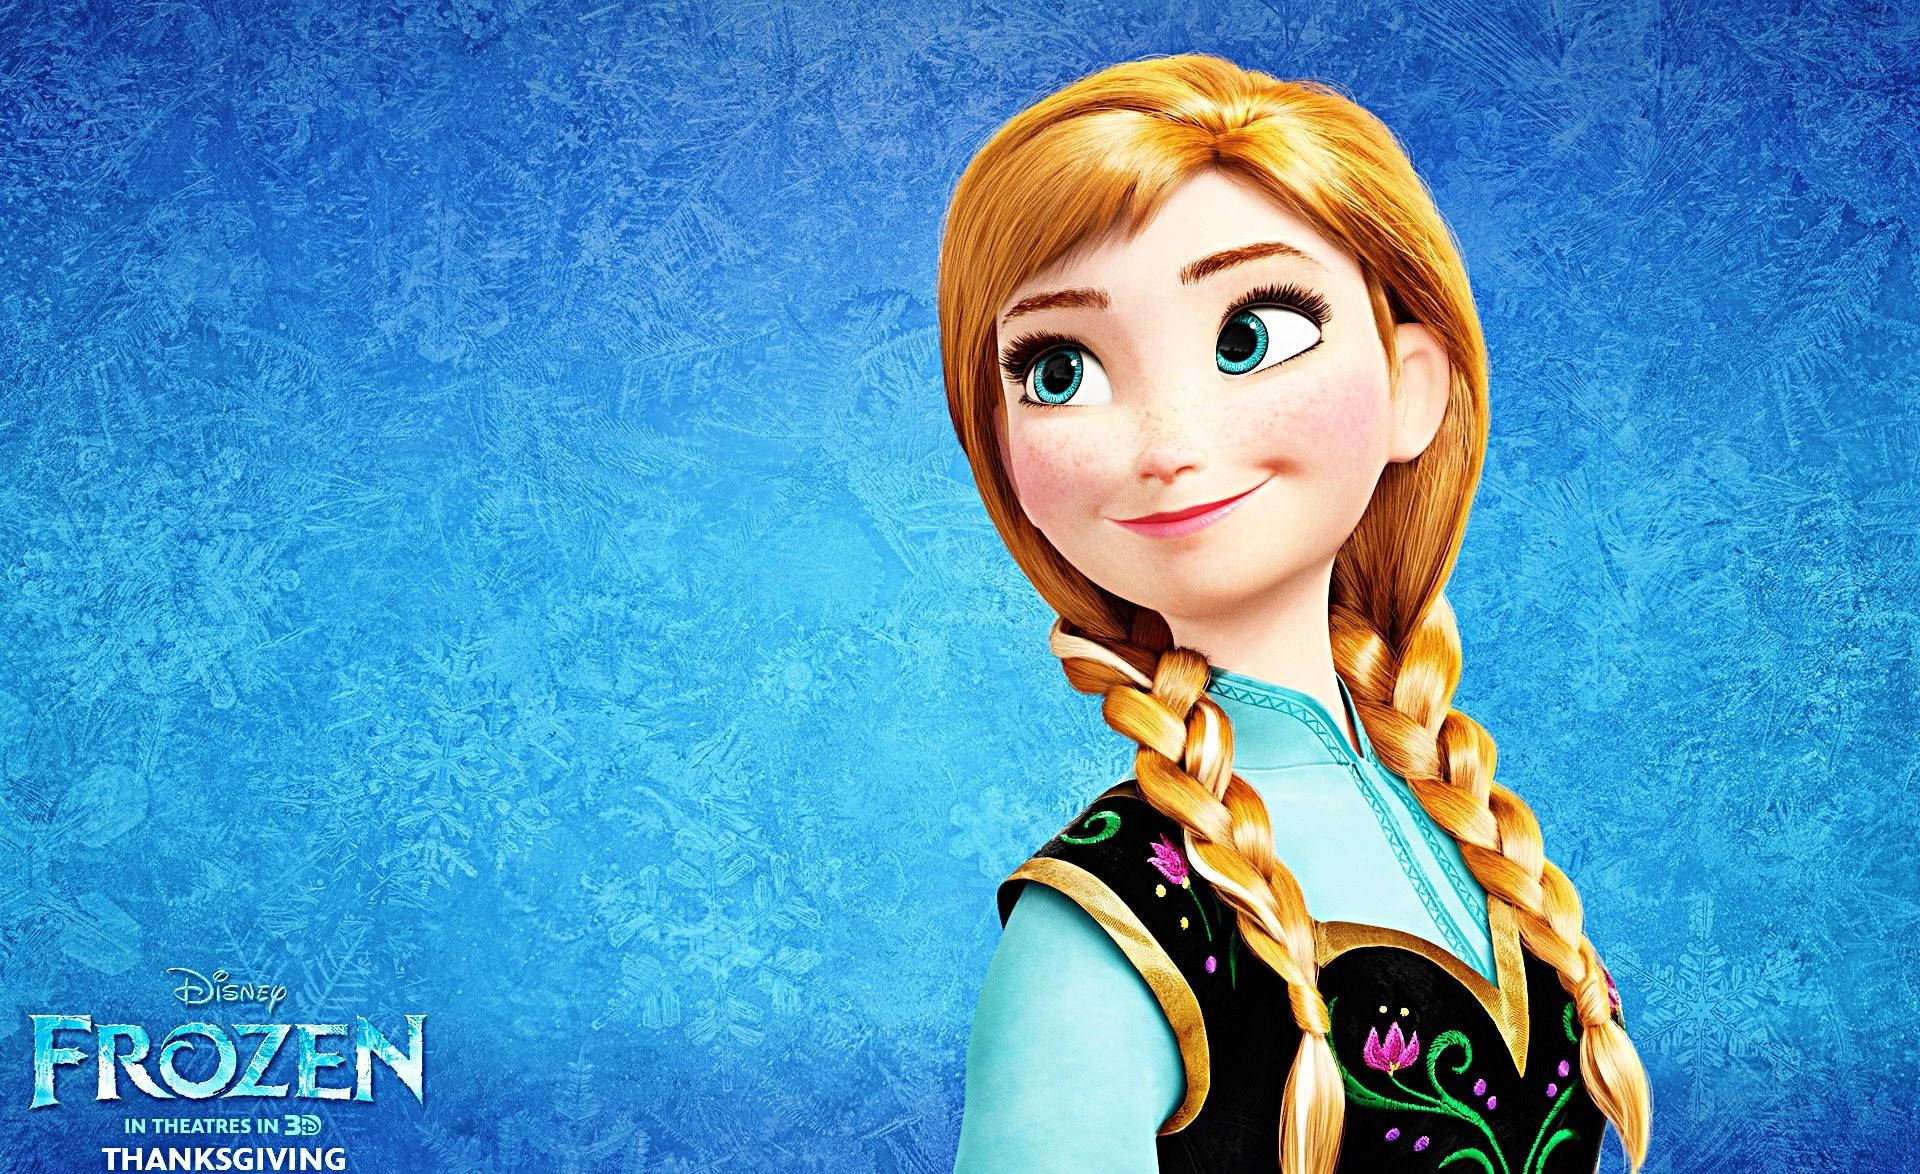 Disney Character Anna Of Frozen